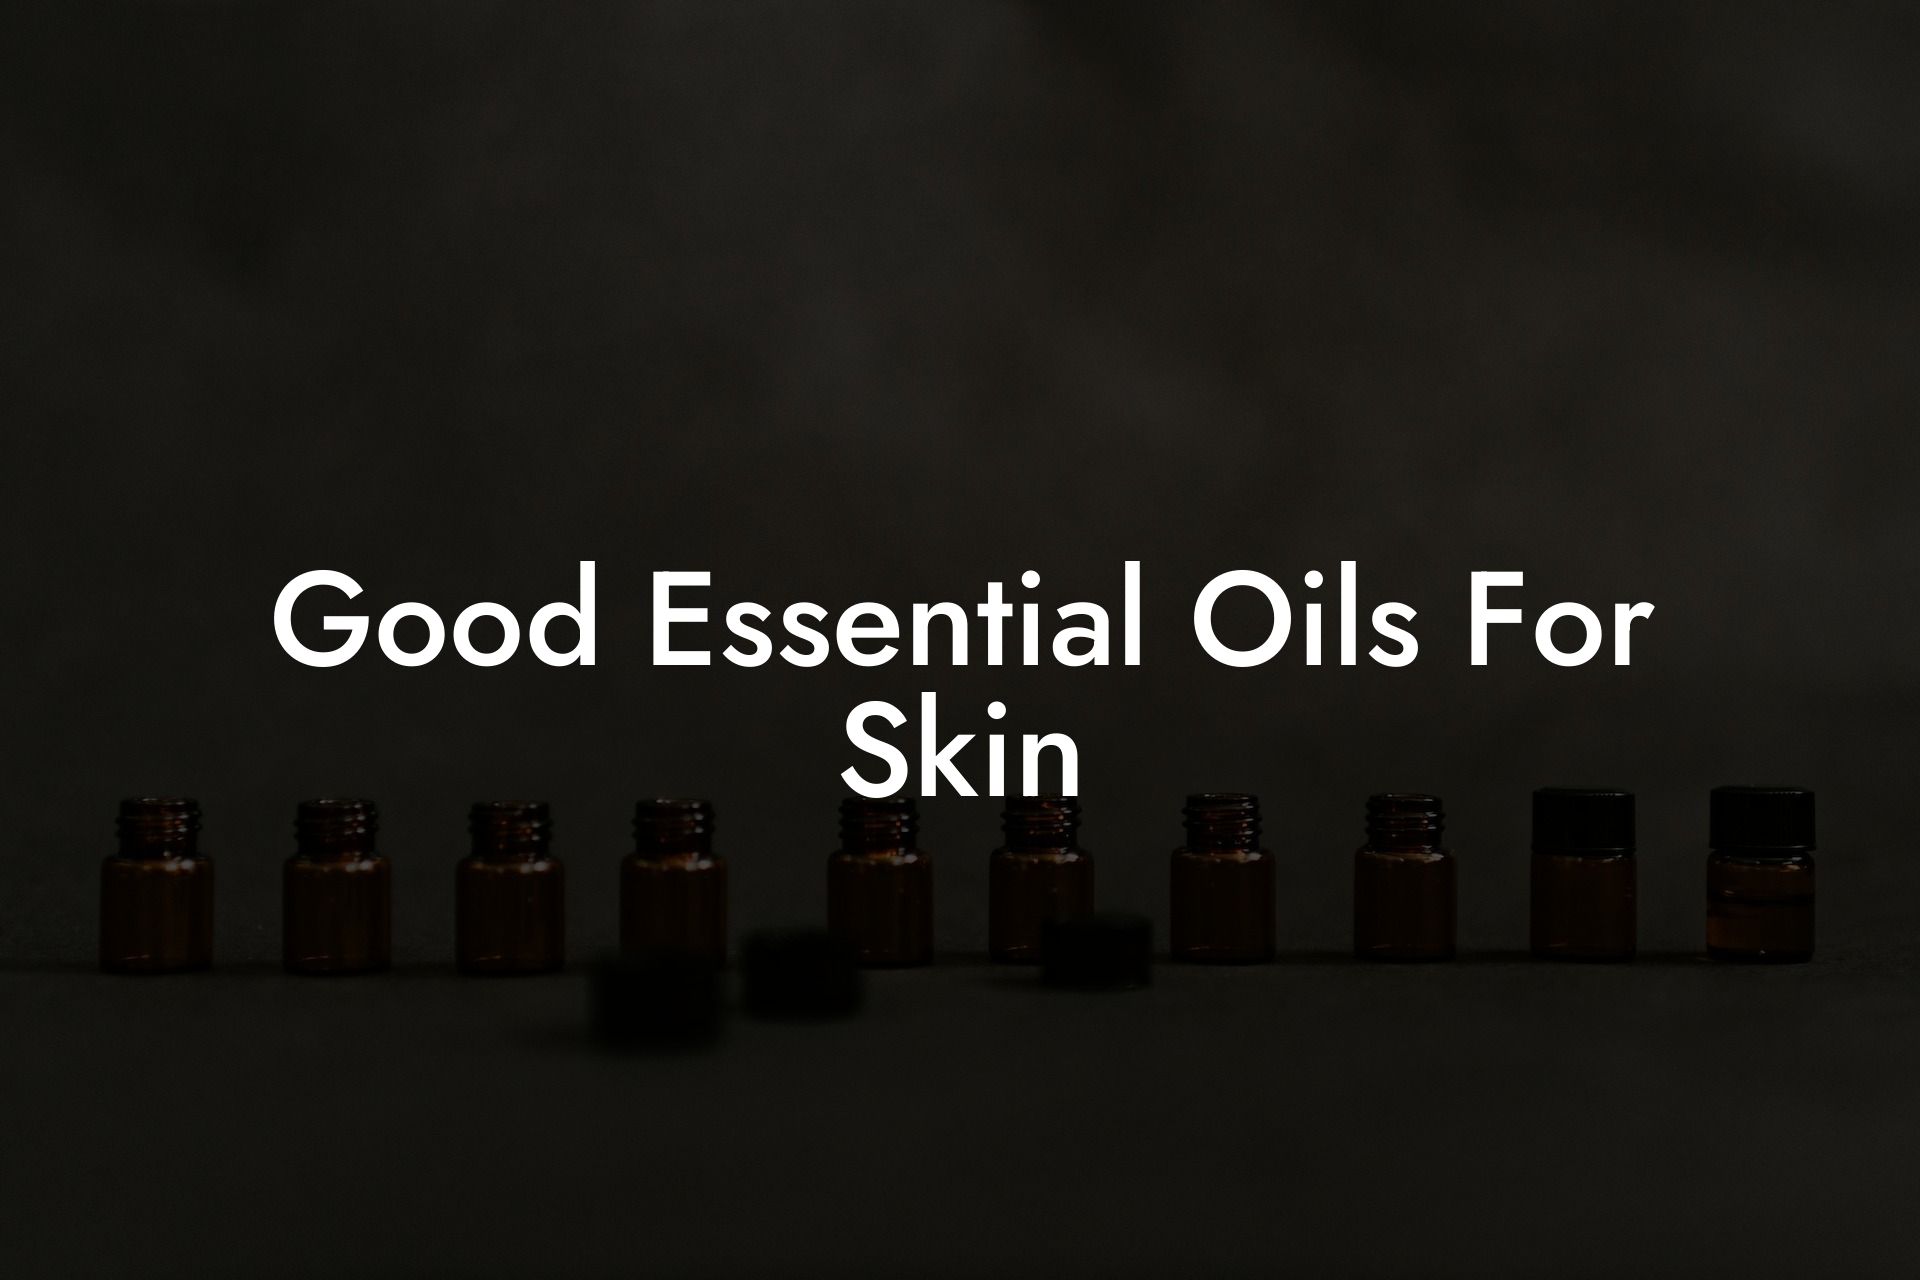 Good Essential Oils For Skin